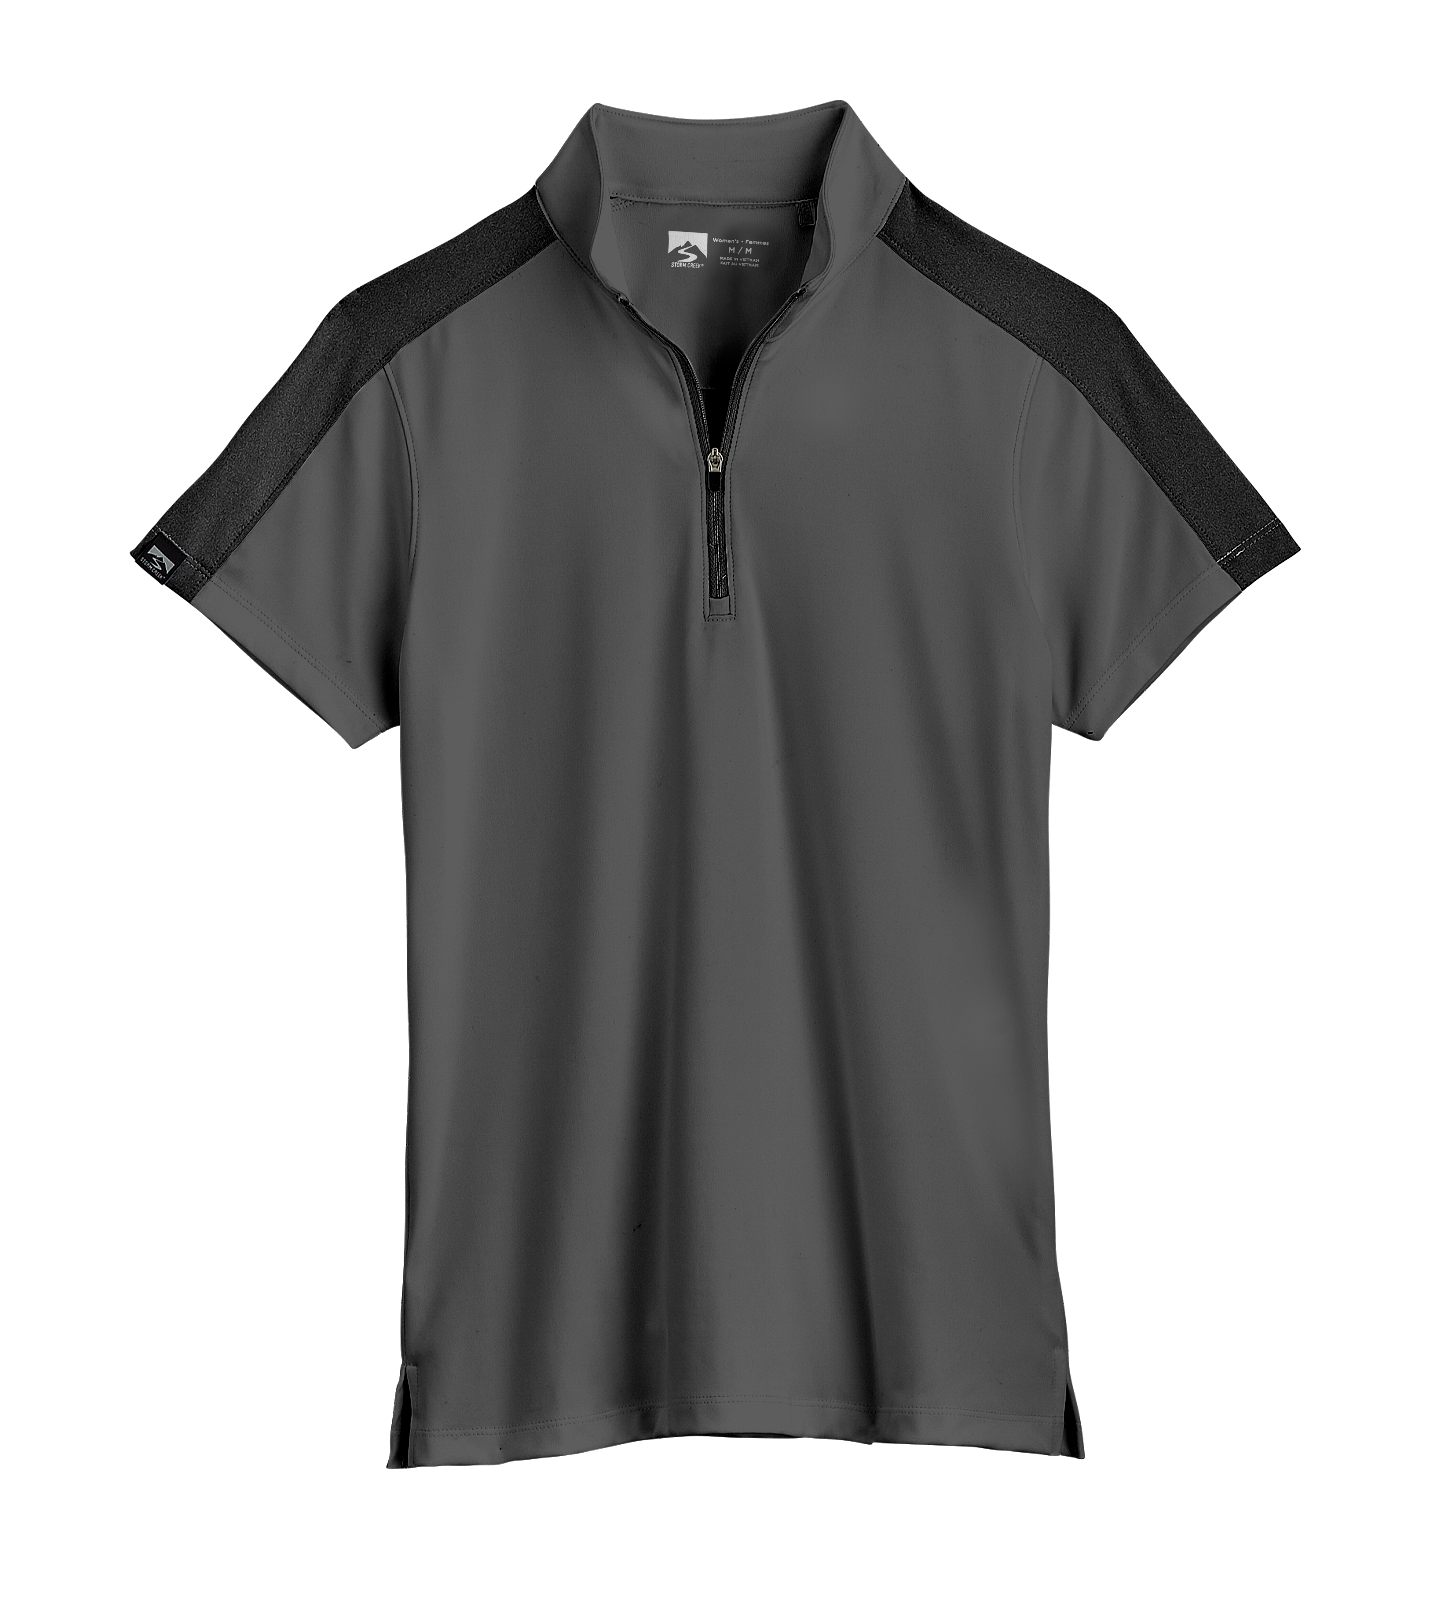 Storm Creek Activator Short-Sleeve Polo Shirt for Ladies - Dark Heather Gray/Black - S